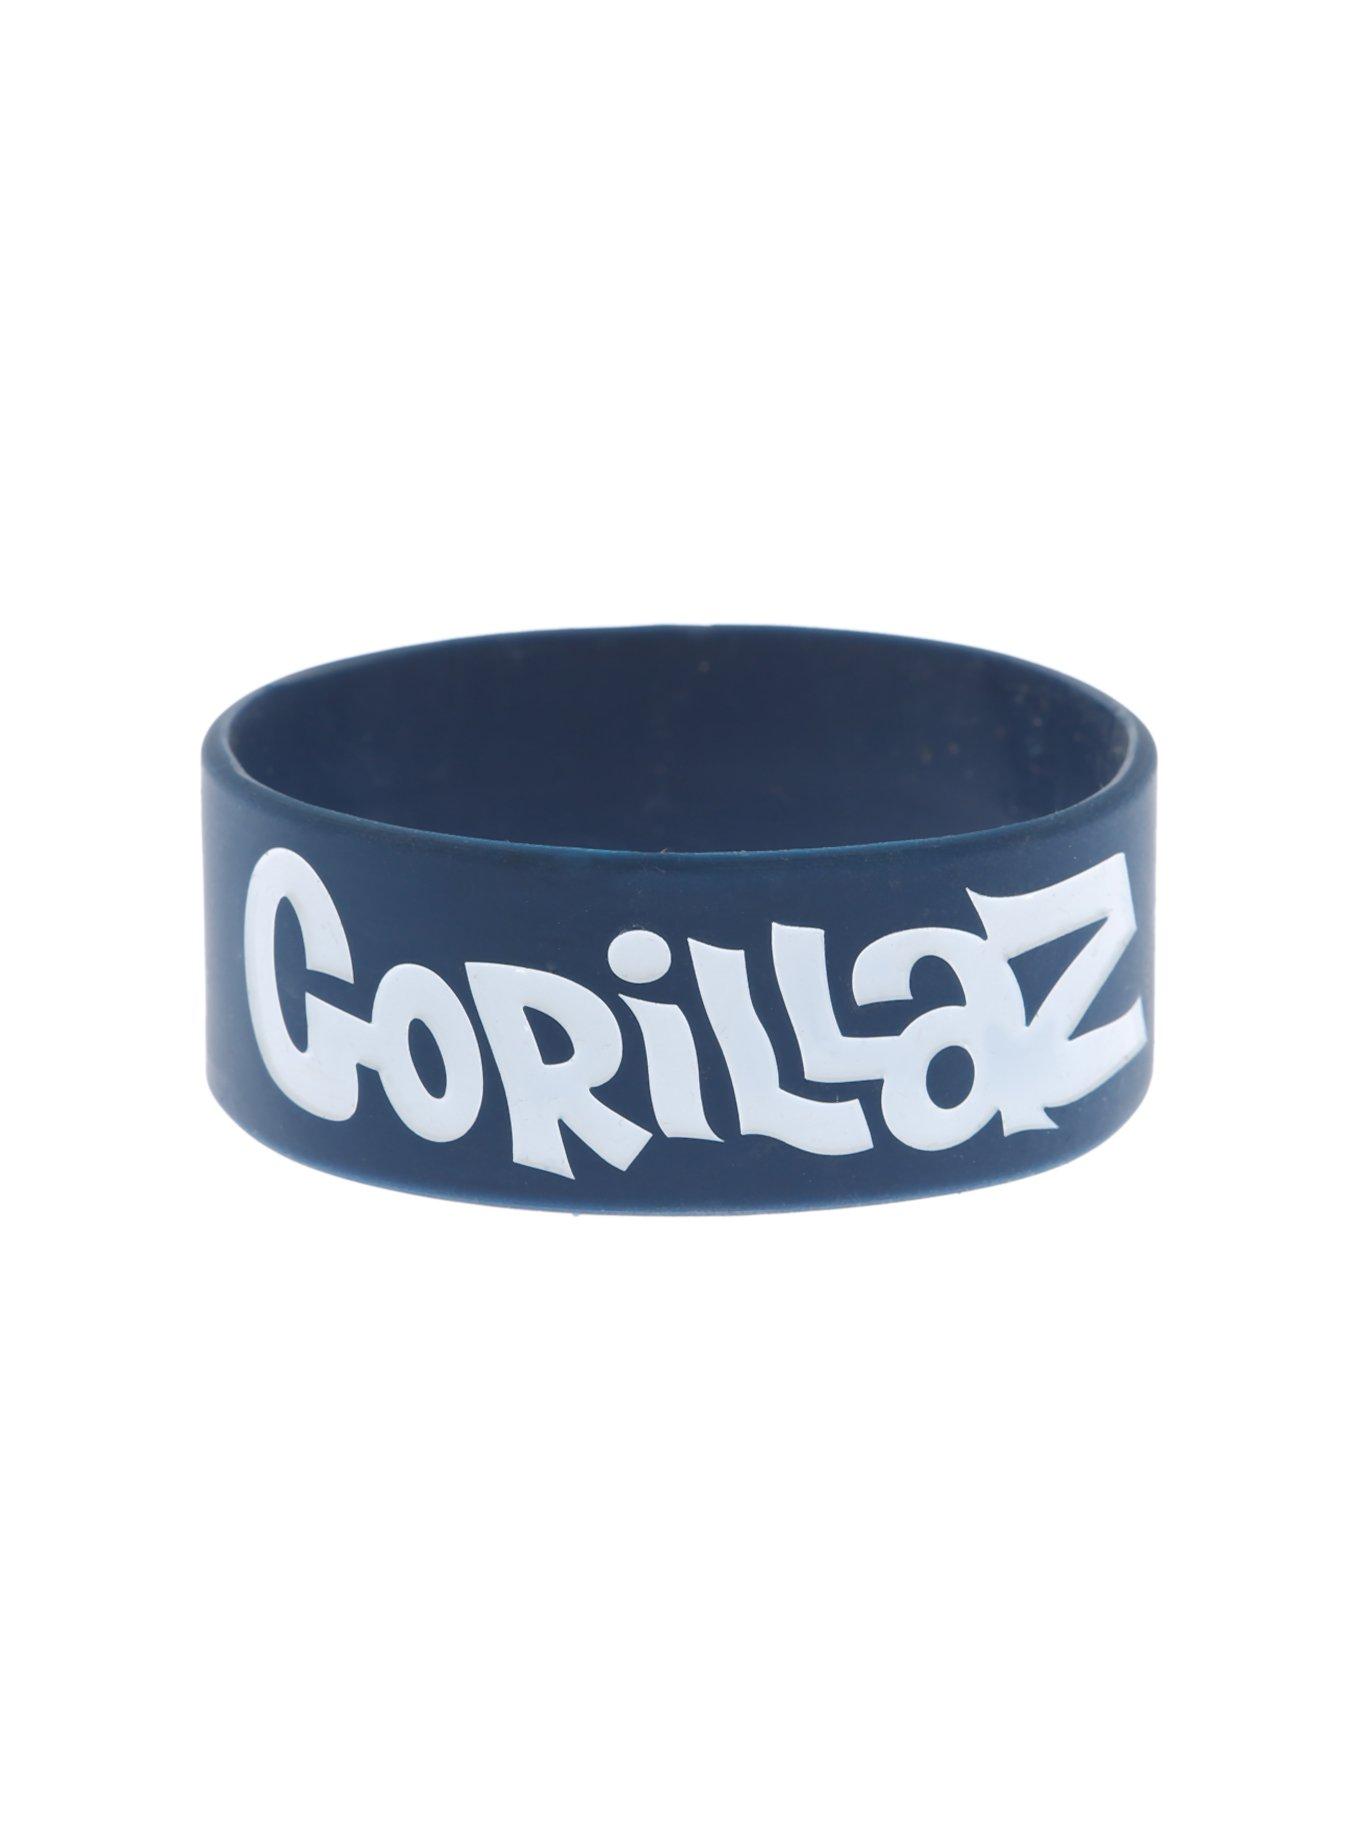 Gorillaz Blue Group Rubber Bracelet, , hi-res